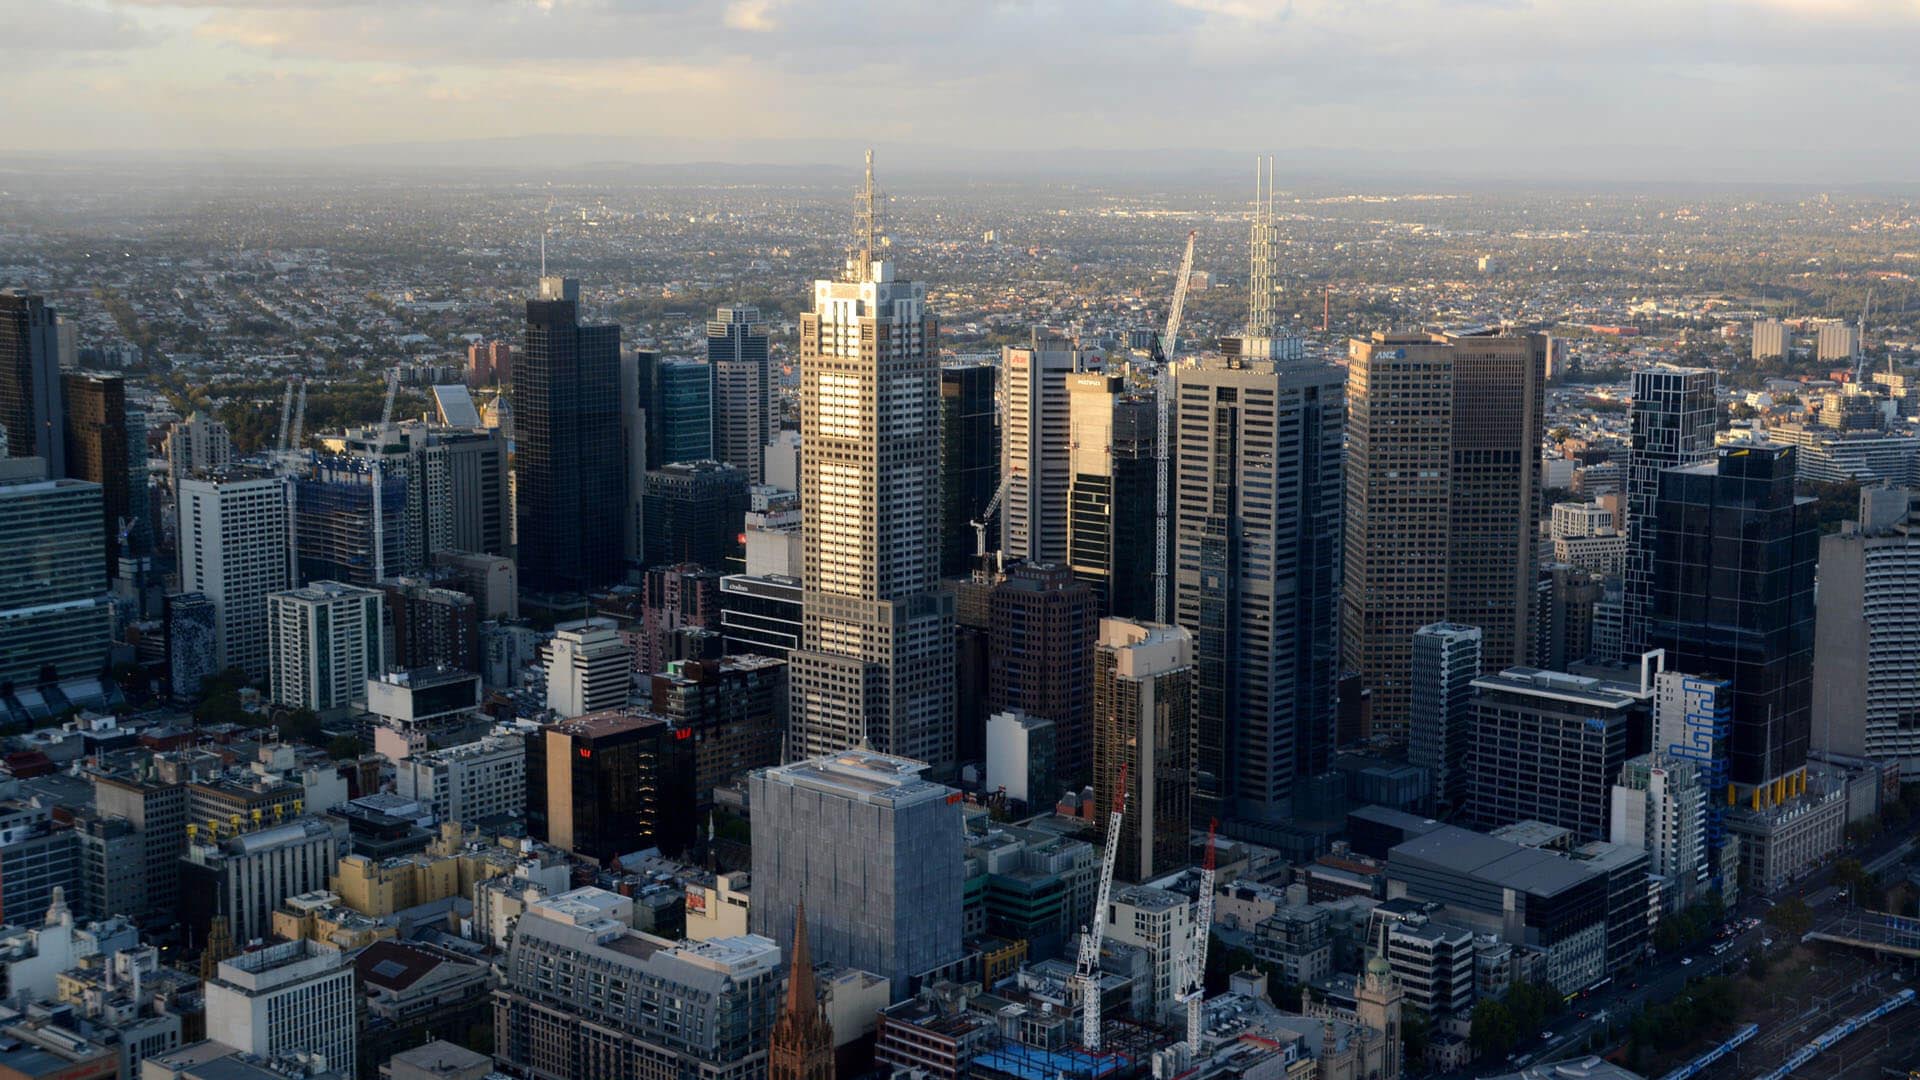 The skyline of the city of Melbourne, Australia